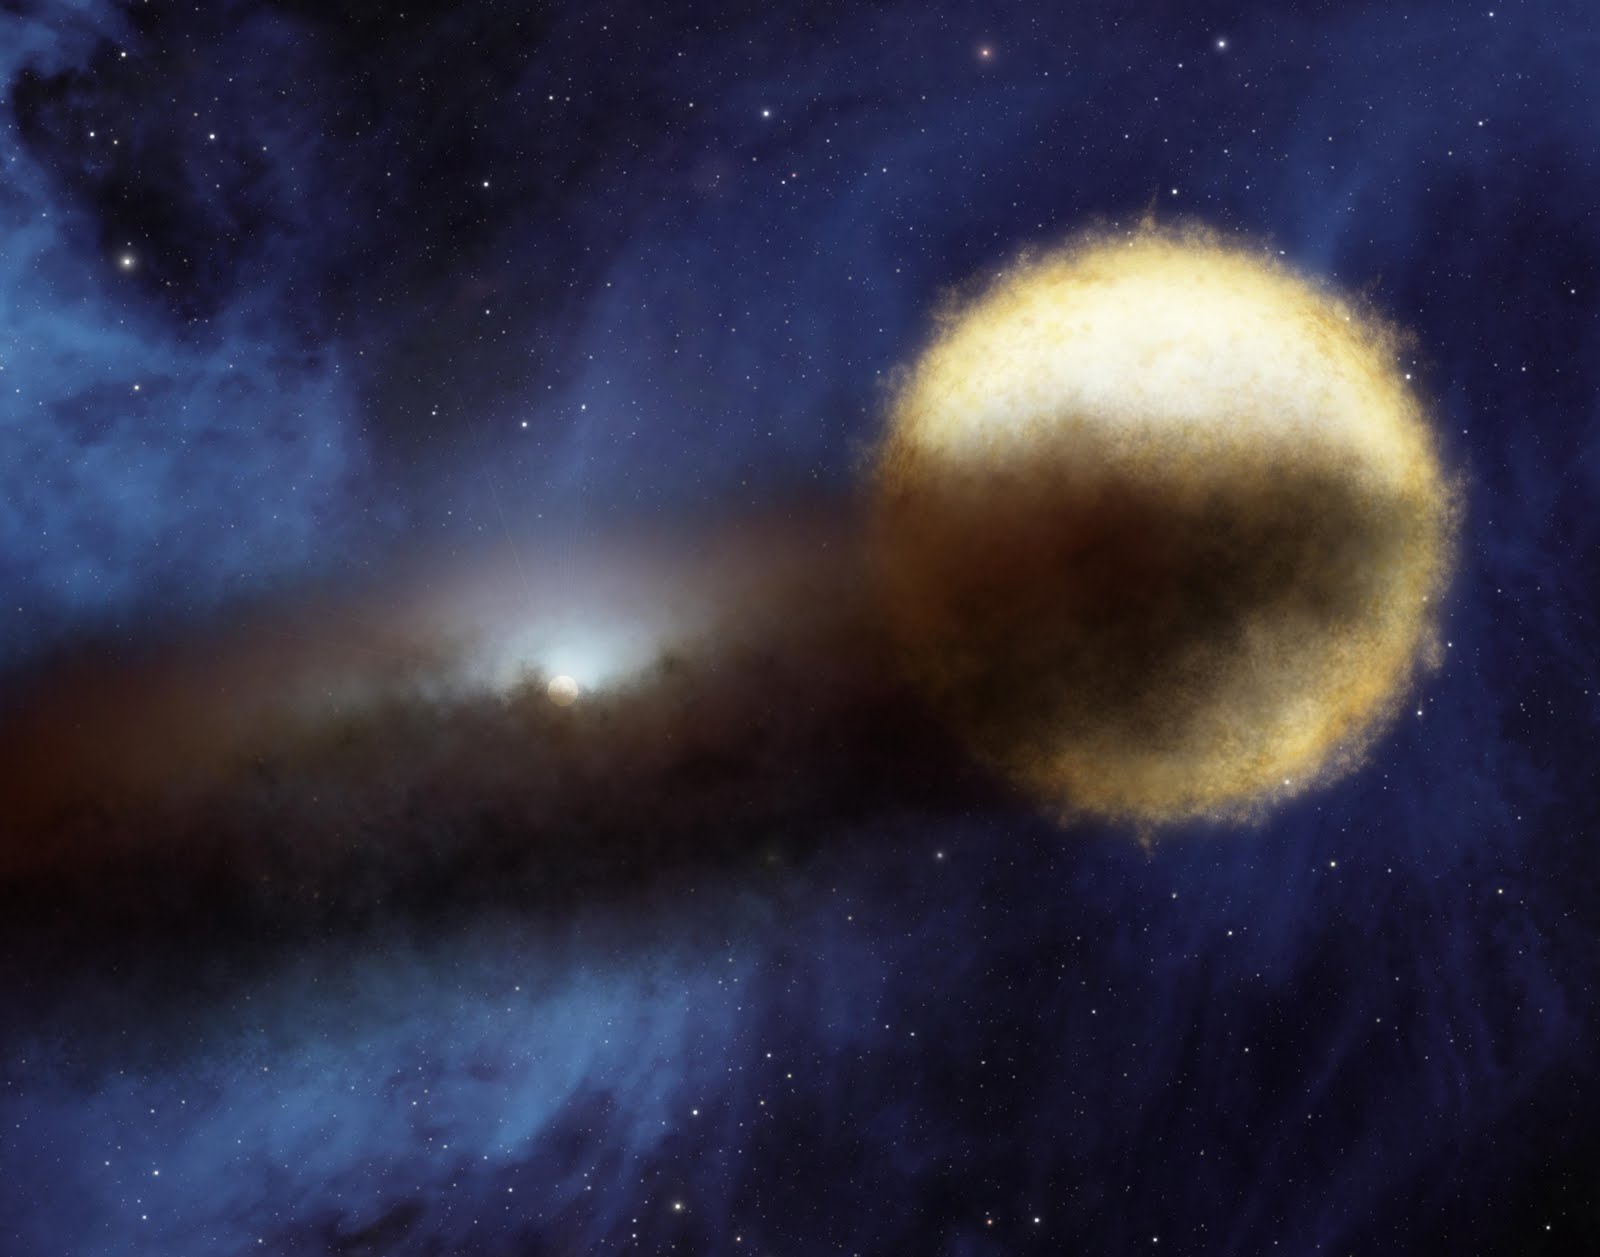 Bintang Epsilon Aurigae ini akan memudar dibalik awan 